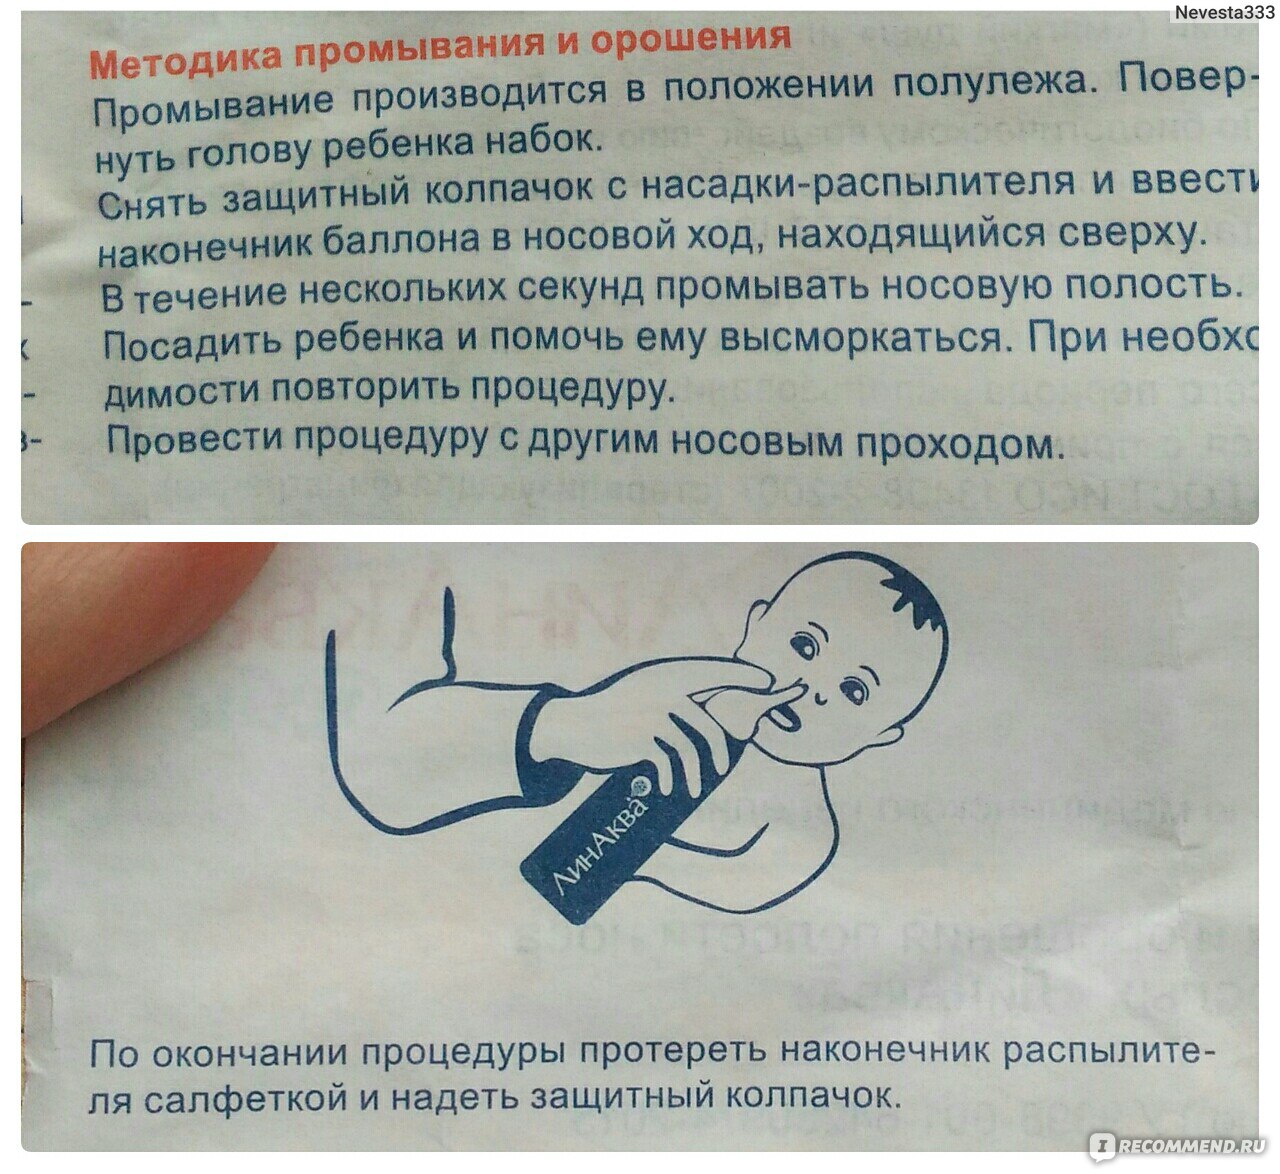 Можно ли промыть нос физраствором при насморке. Как промывать нос. Промывание носа у грудничка аквалором. Как правильно промывать нос ребенку. Как правильно промывать нос ребёнку 2 года.